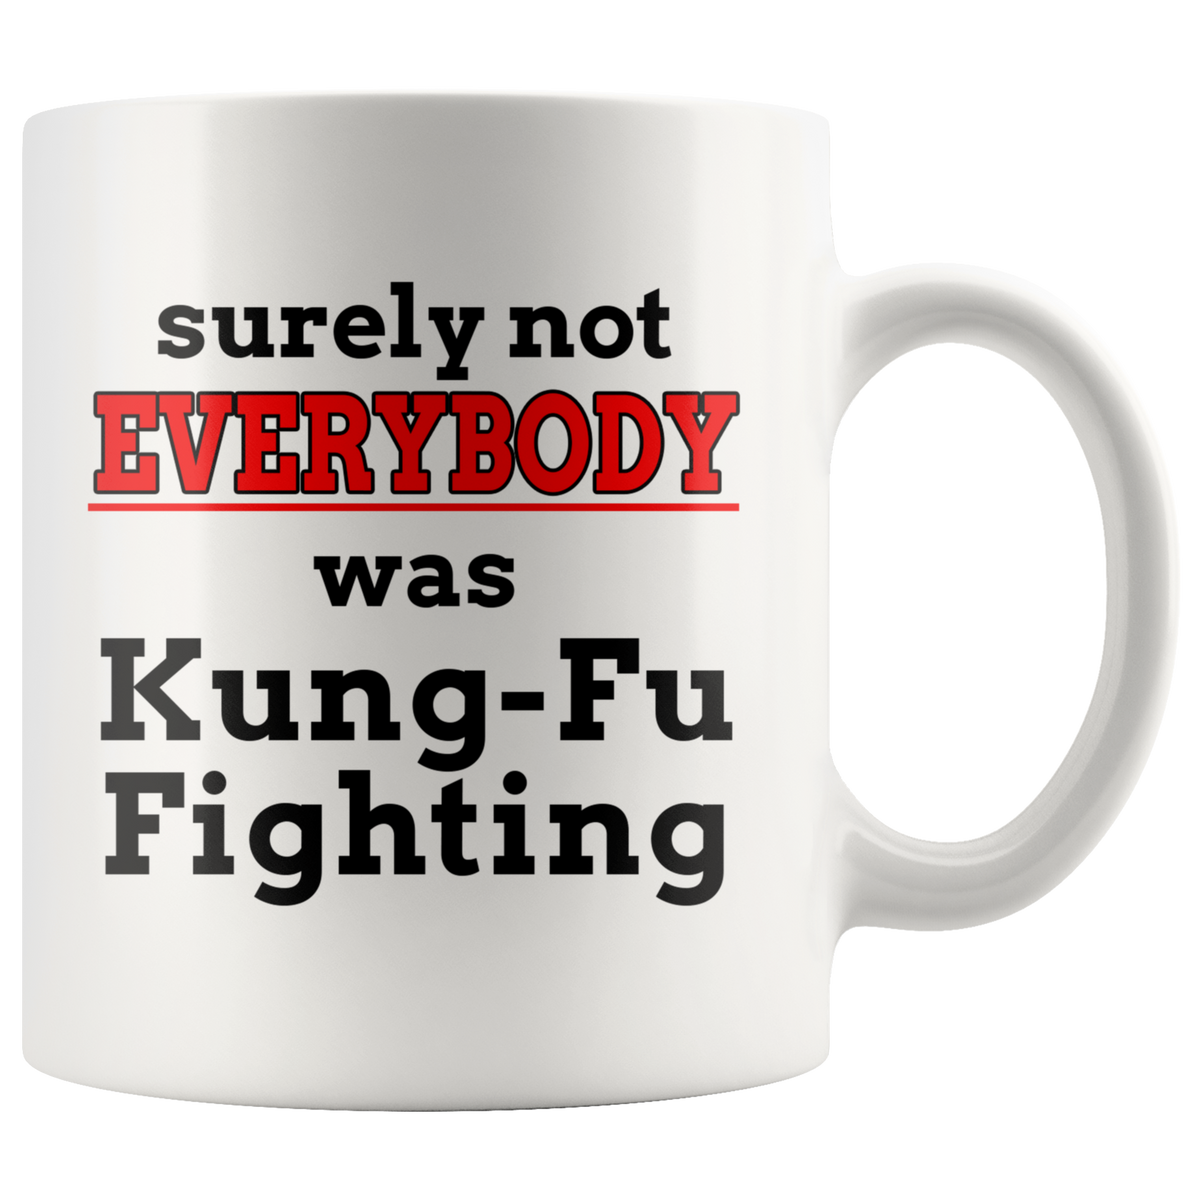 Not Yet Begun to Fight Mug